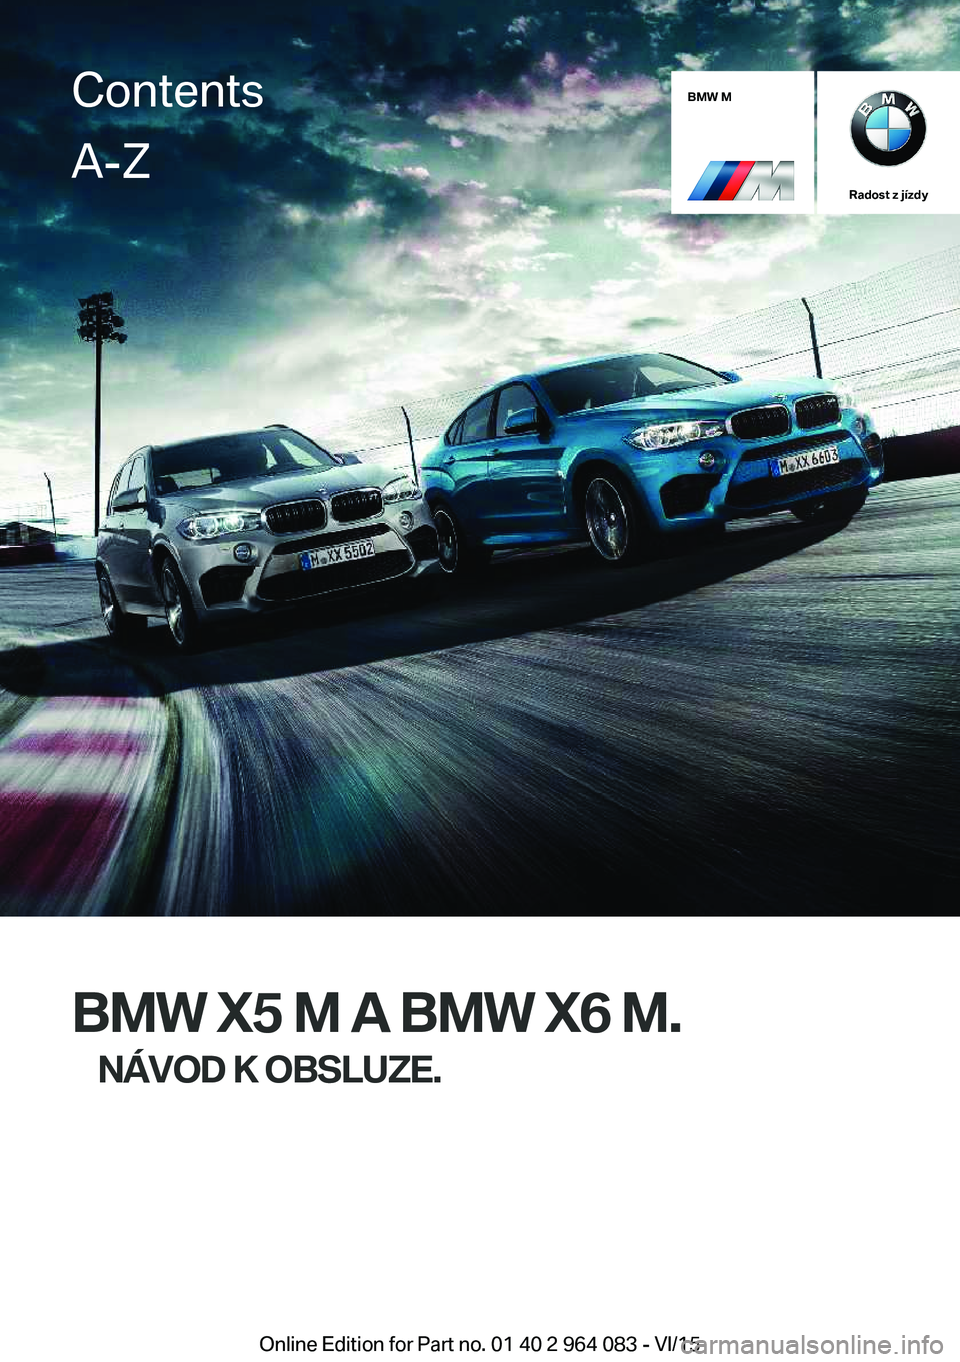 BMW X5 M 2016  Návod na použití (in Czech) BMW M
Radost z jízdy
BMW X5 M A BMW X6 M.NÁVOD K OBSLUZE.
ContentsA-Z
Online Edition for Part no. 01 40 2 964 083 - VI/15   